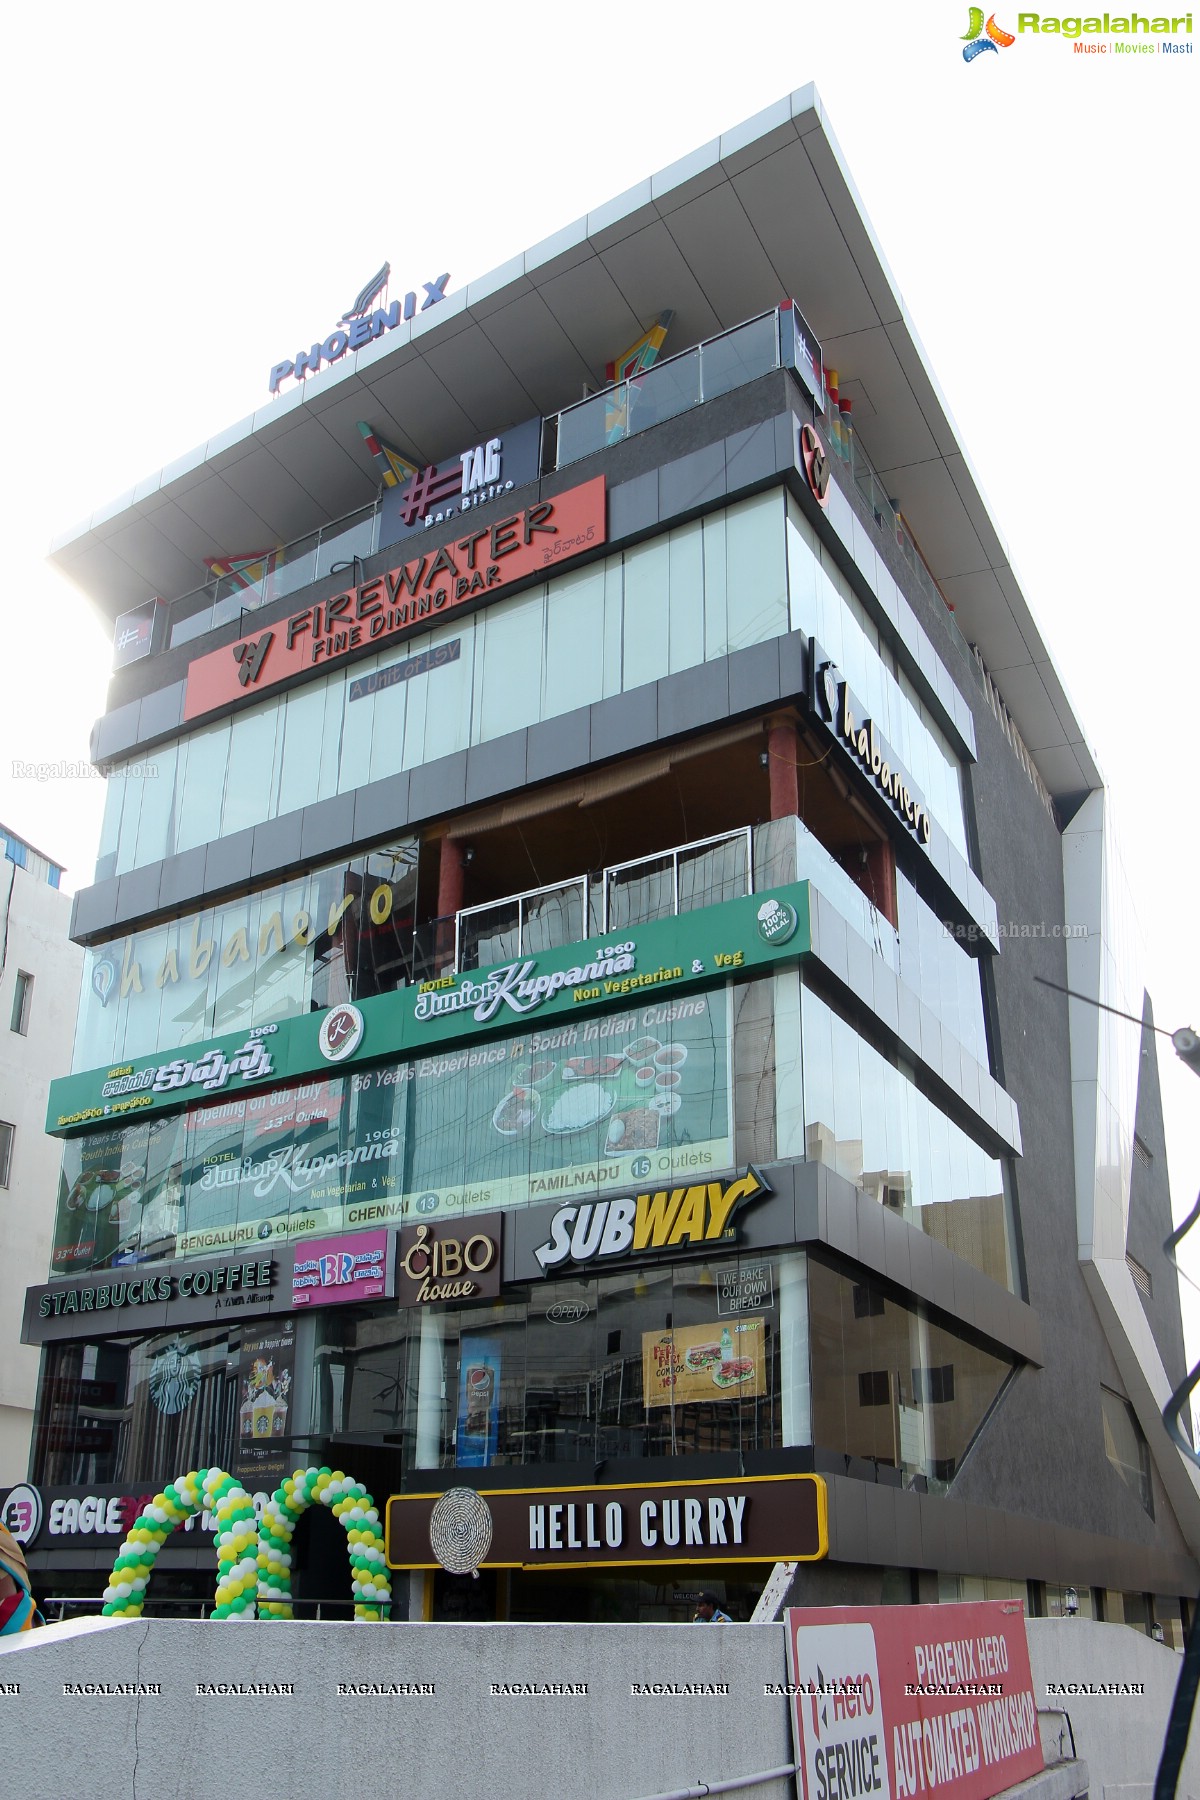 Manchu Family launches Hotel Junior Kuppanna in Hyderabad